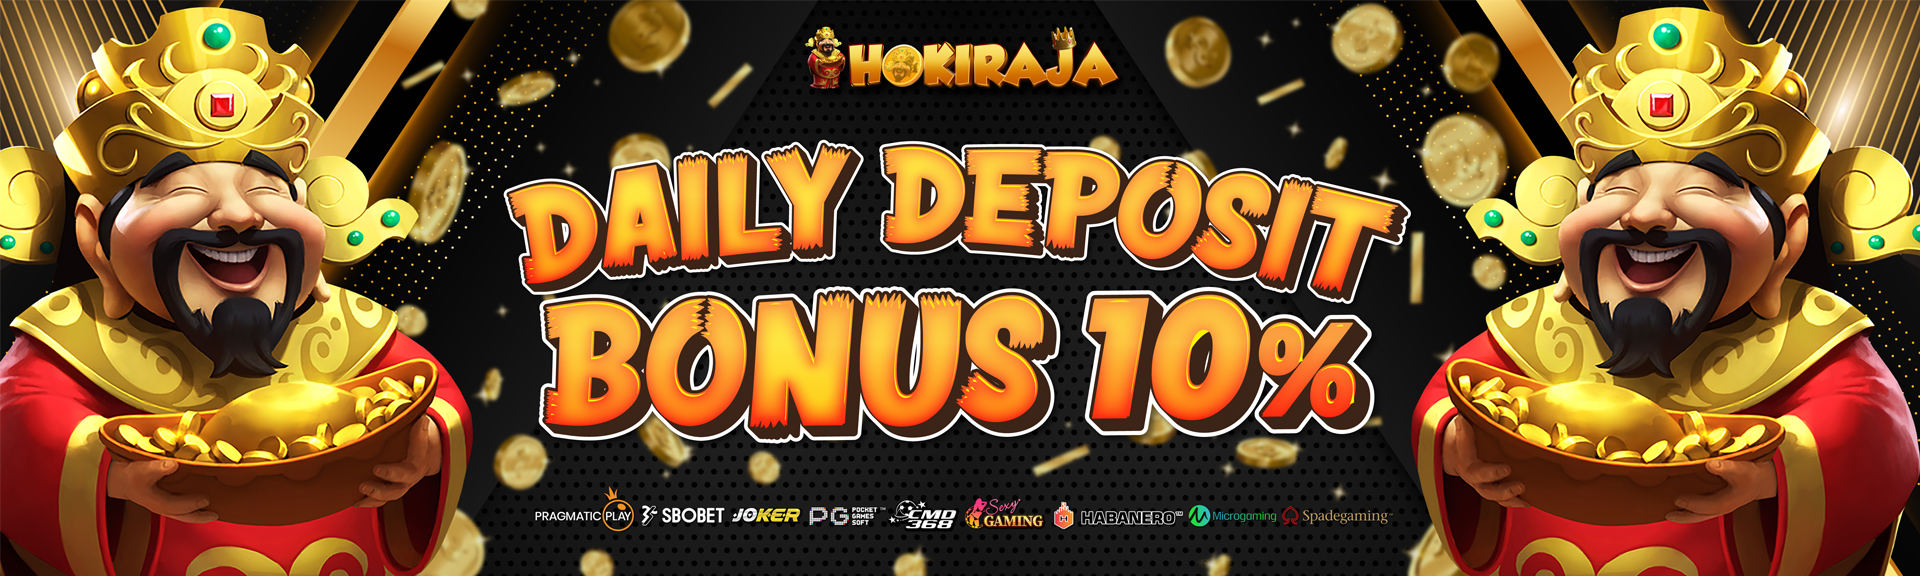 Daily Deposit Bonus 10%